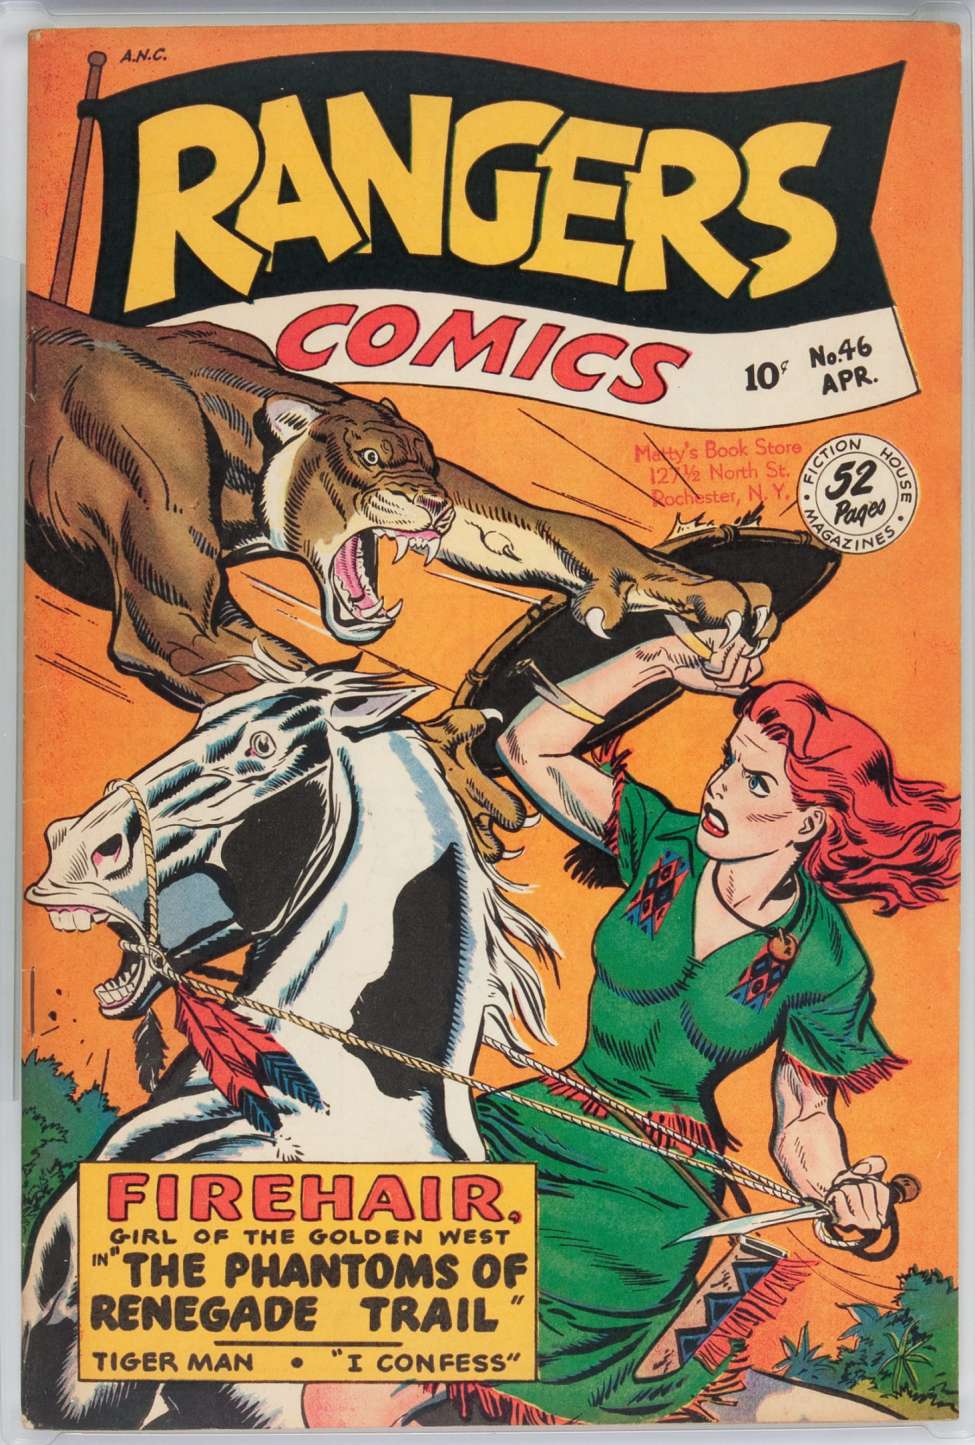 Comic Book Cover For Rangers Comics 46